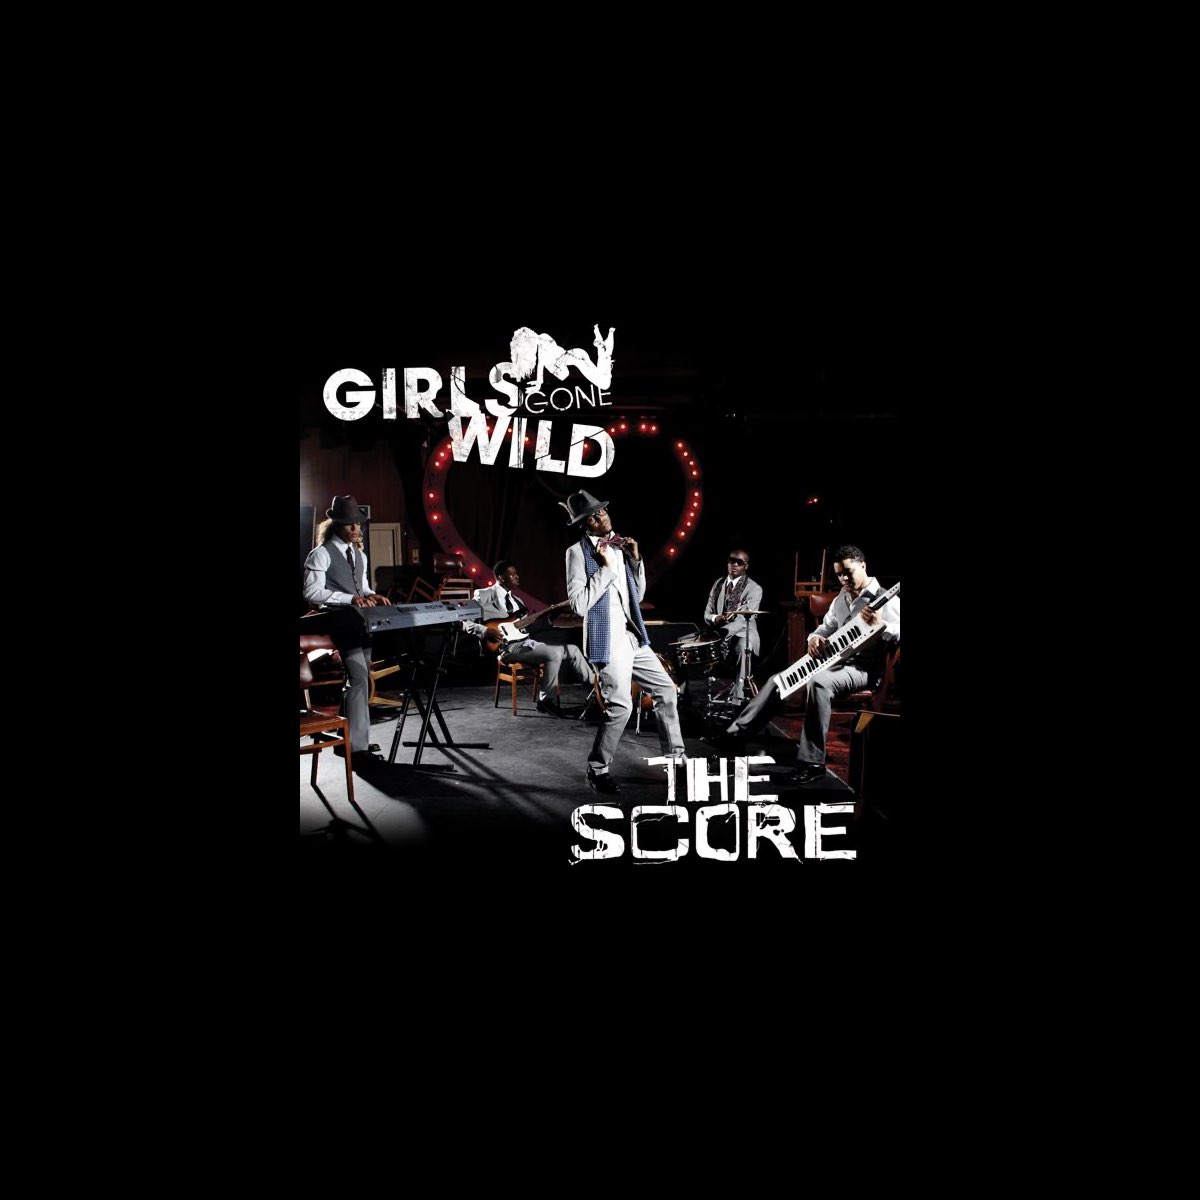 Girls Gone Wild - EP - Album by The Score - Apple Music